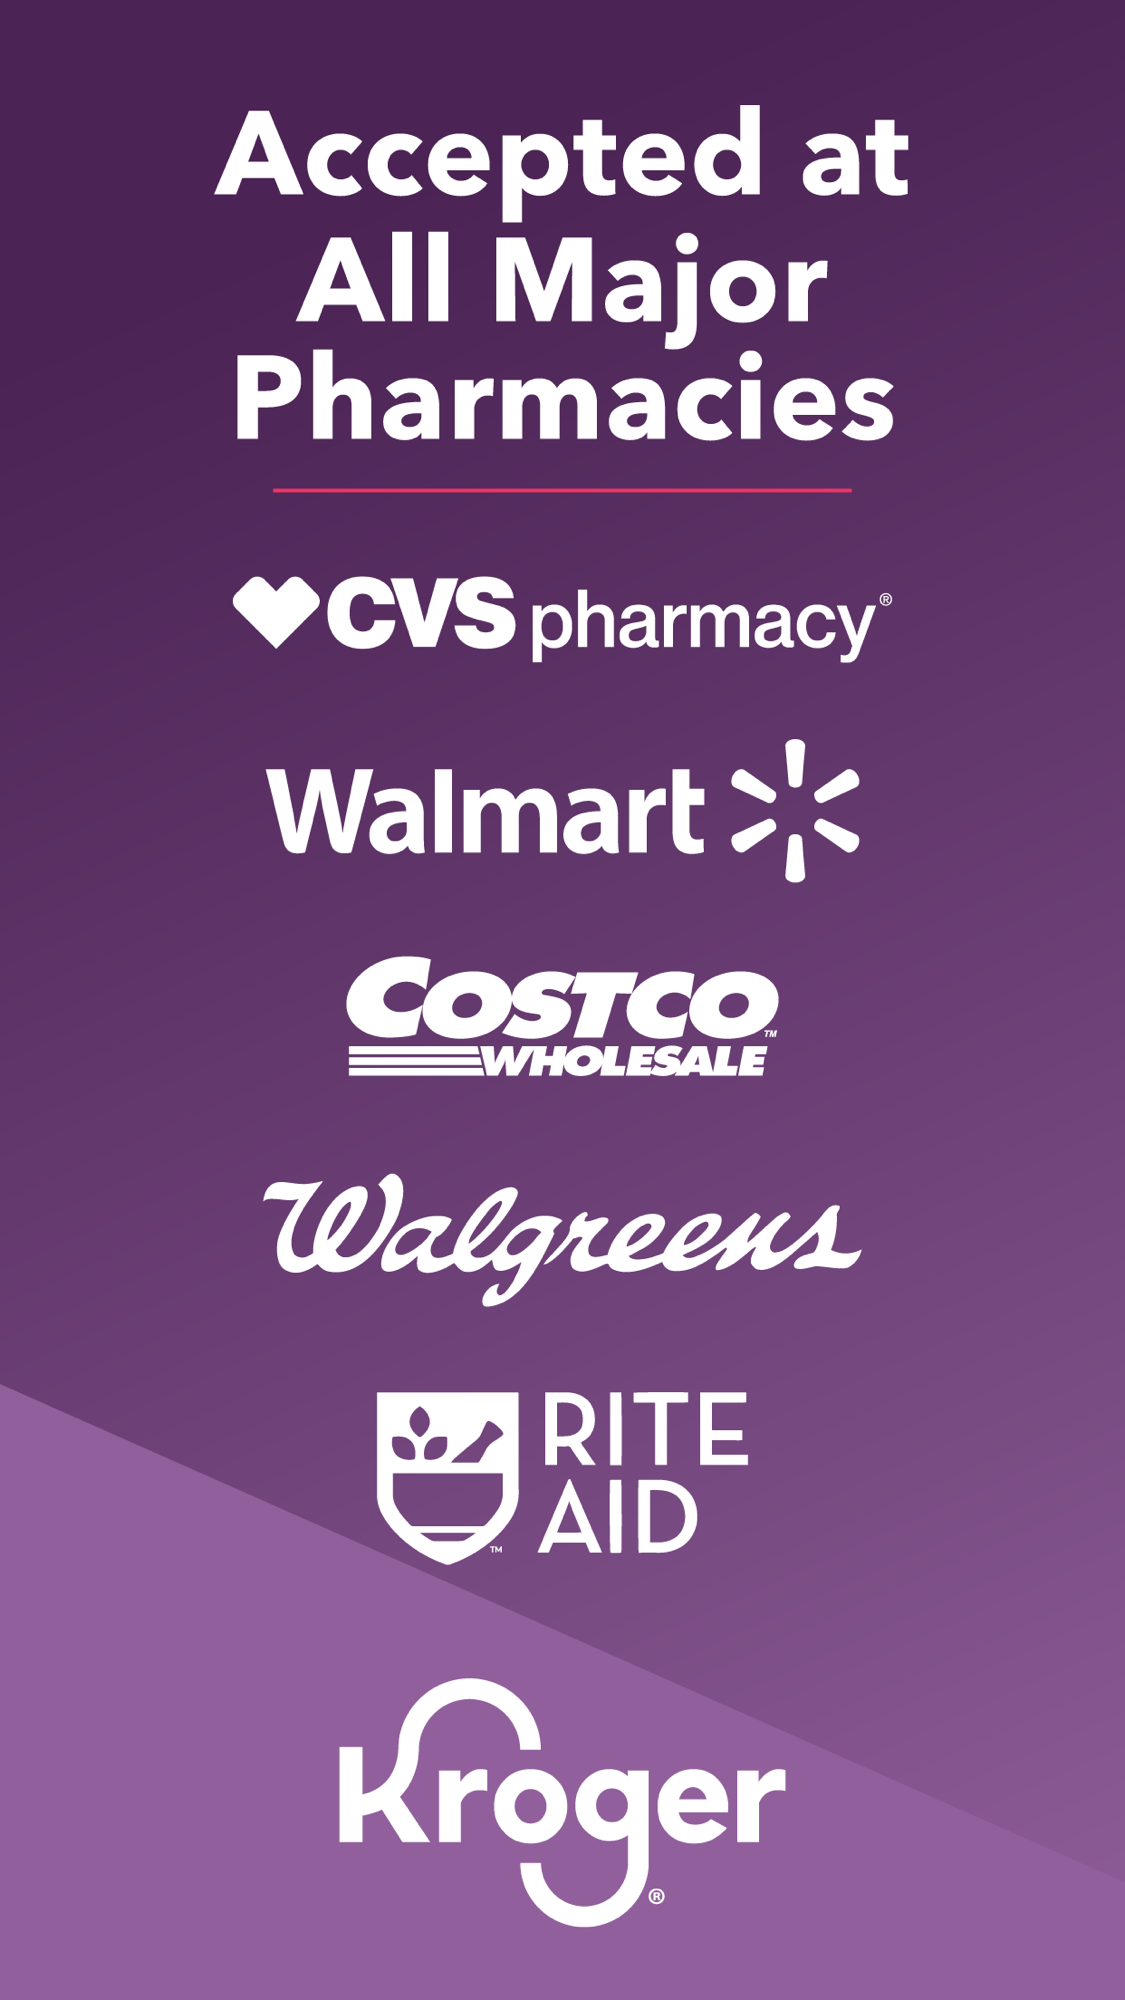 RxSaver Prescription Discounts  Featured Image for Version 